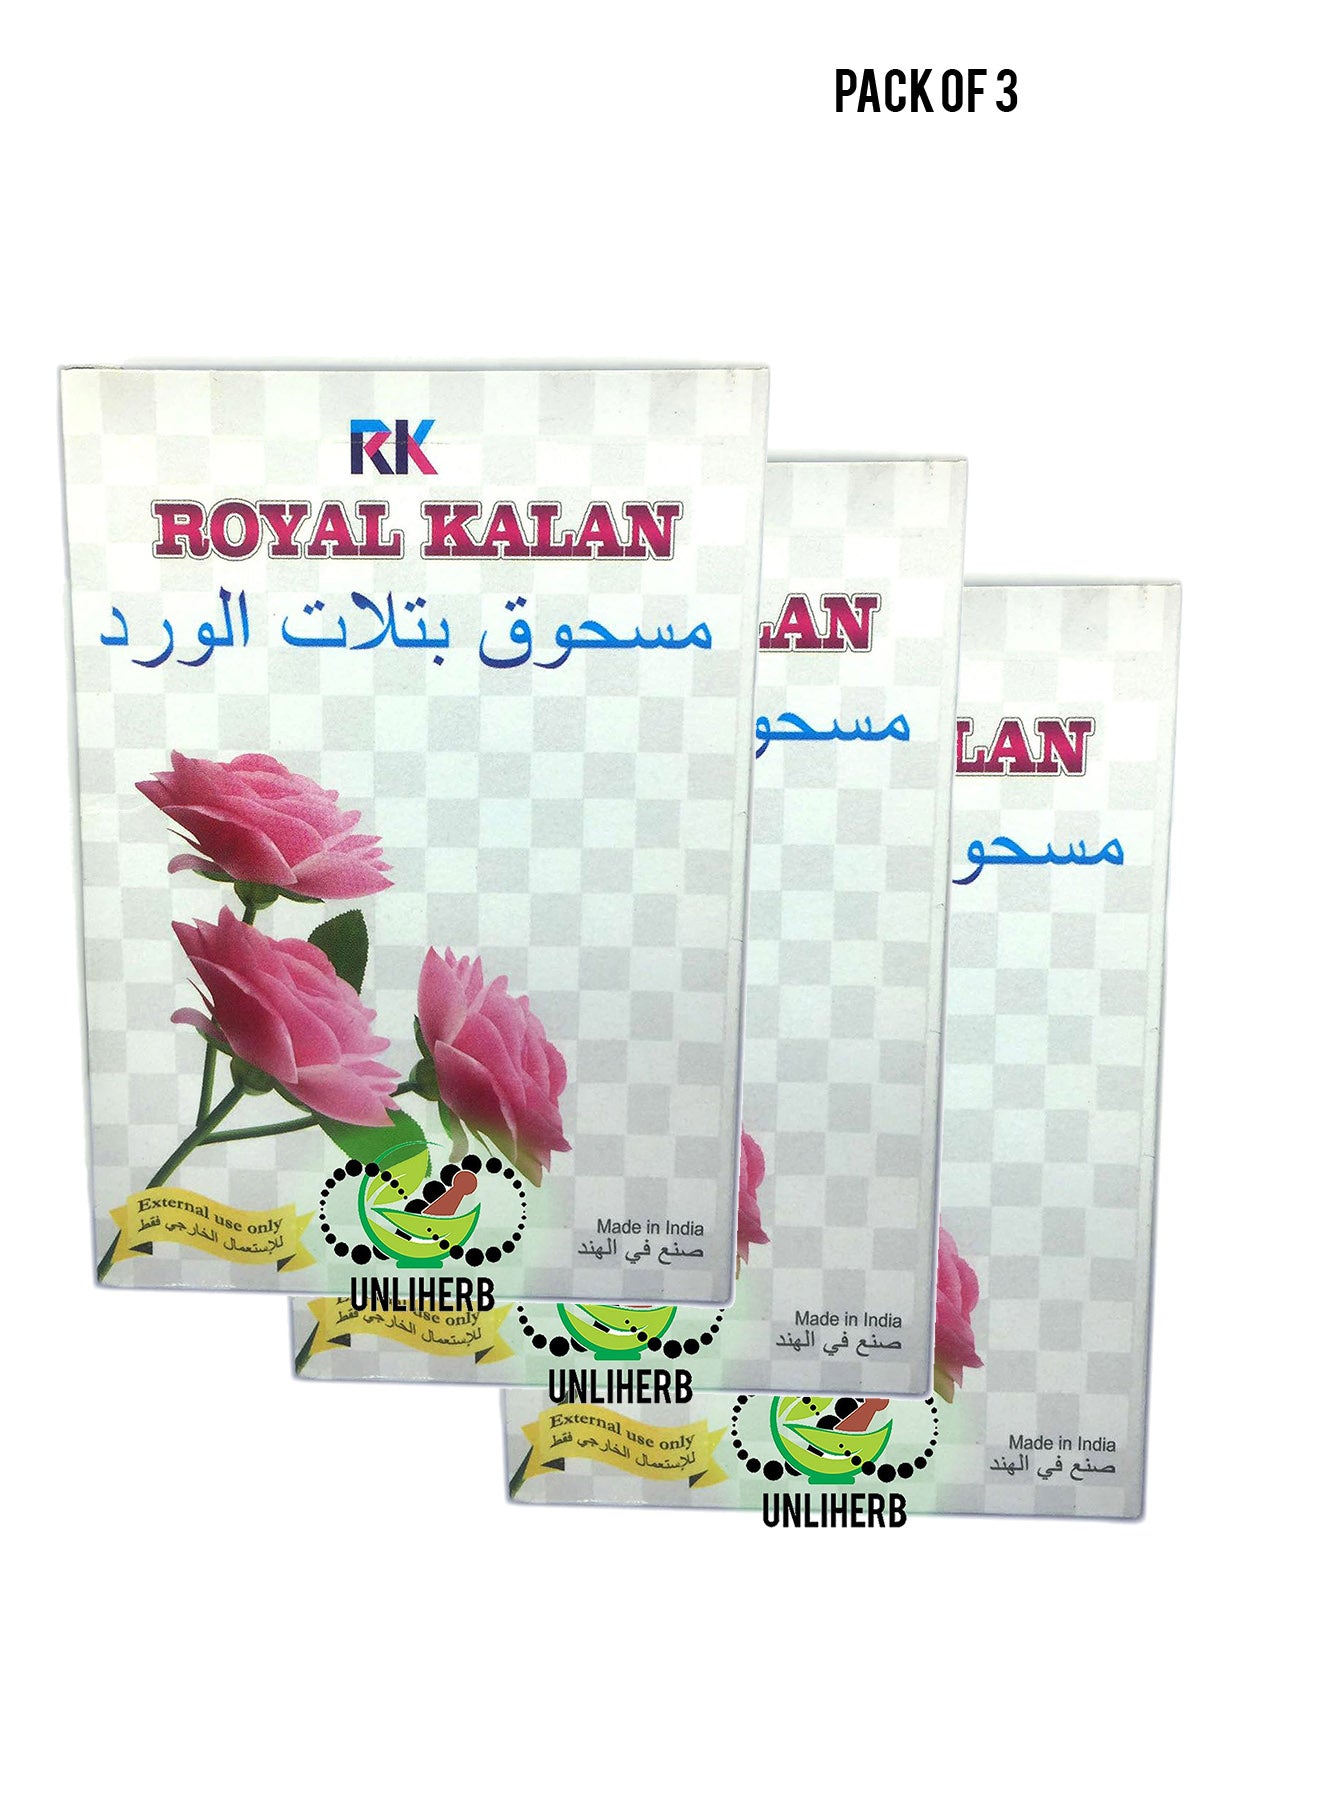 Royal Kalan Rose Petal Powder 100g Value Pack of 3 